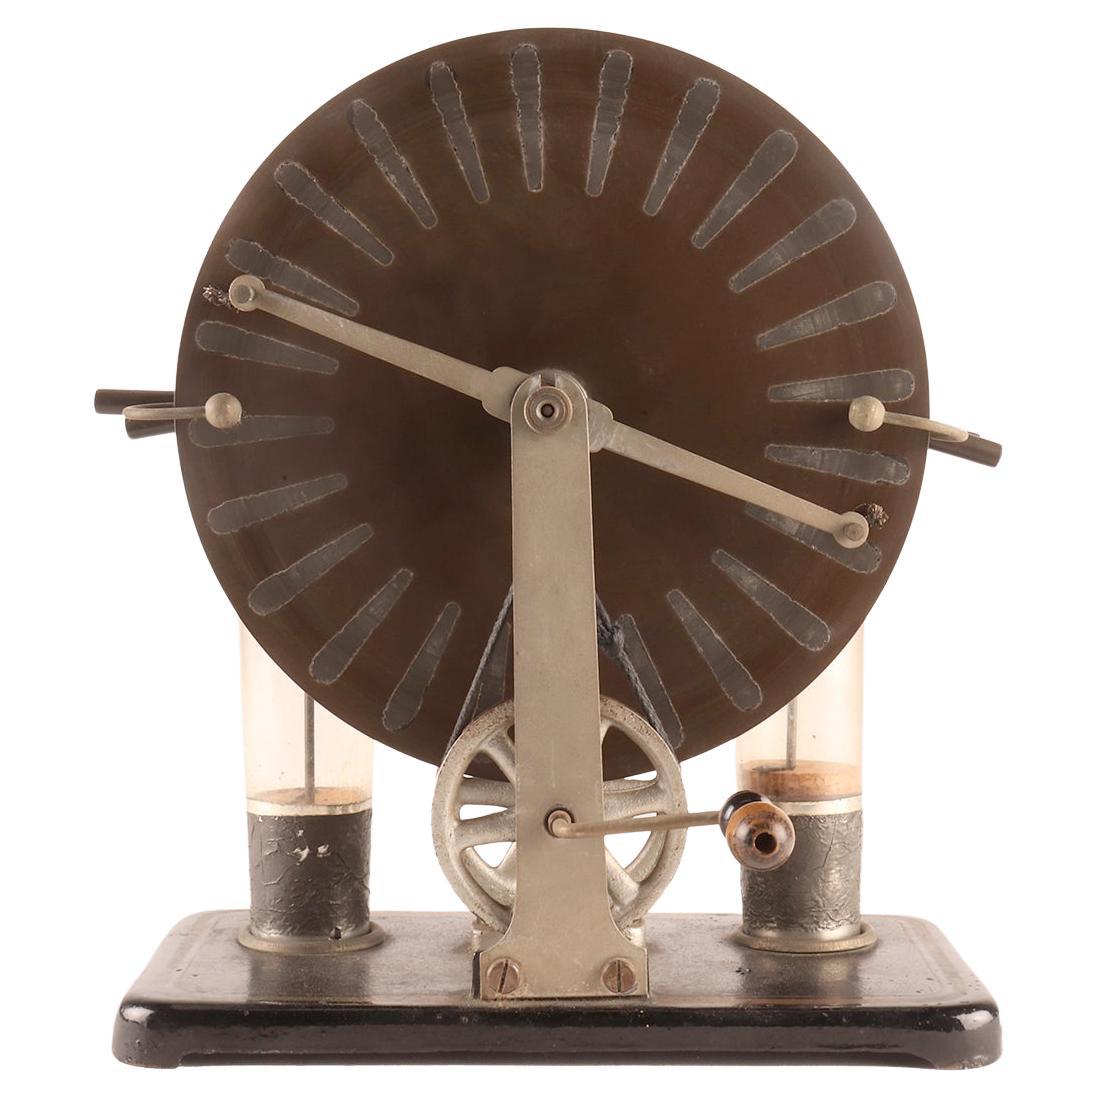 Electrostatic machine by Wimshurst, designed by Rinaldo Damiani, Italy 1900. 